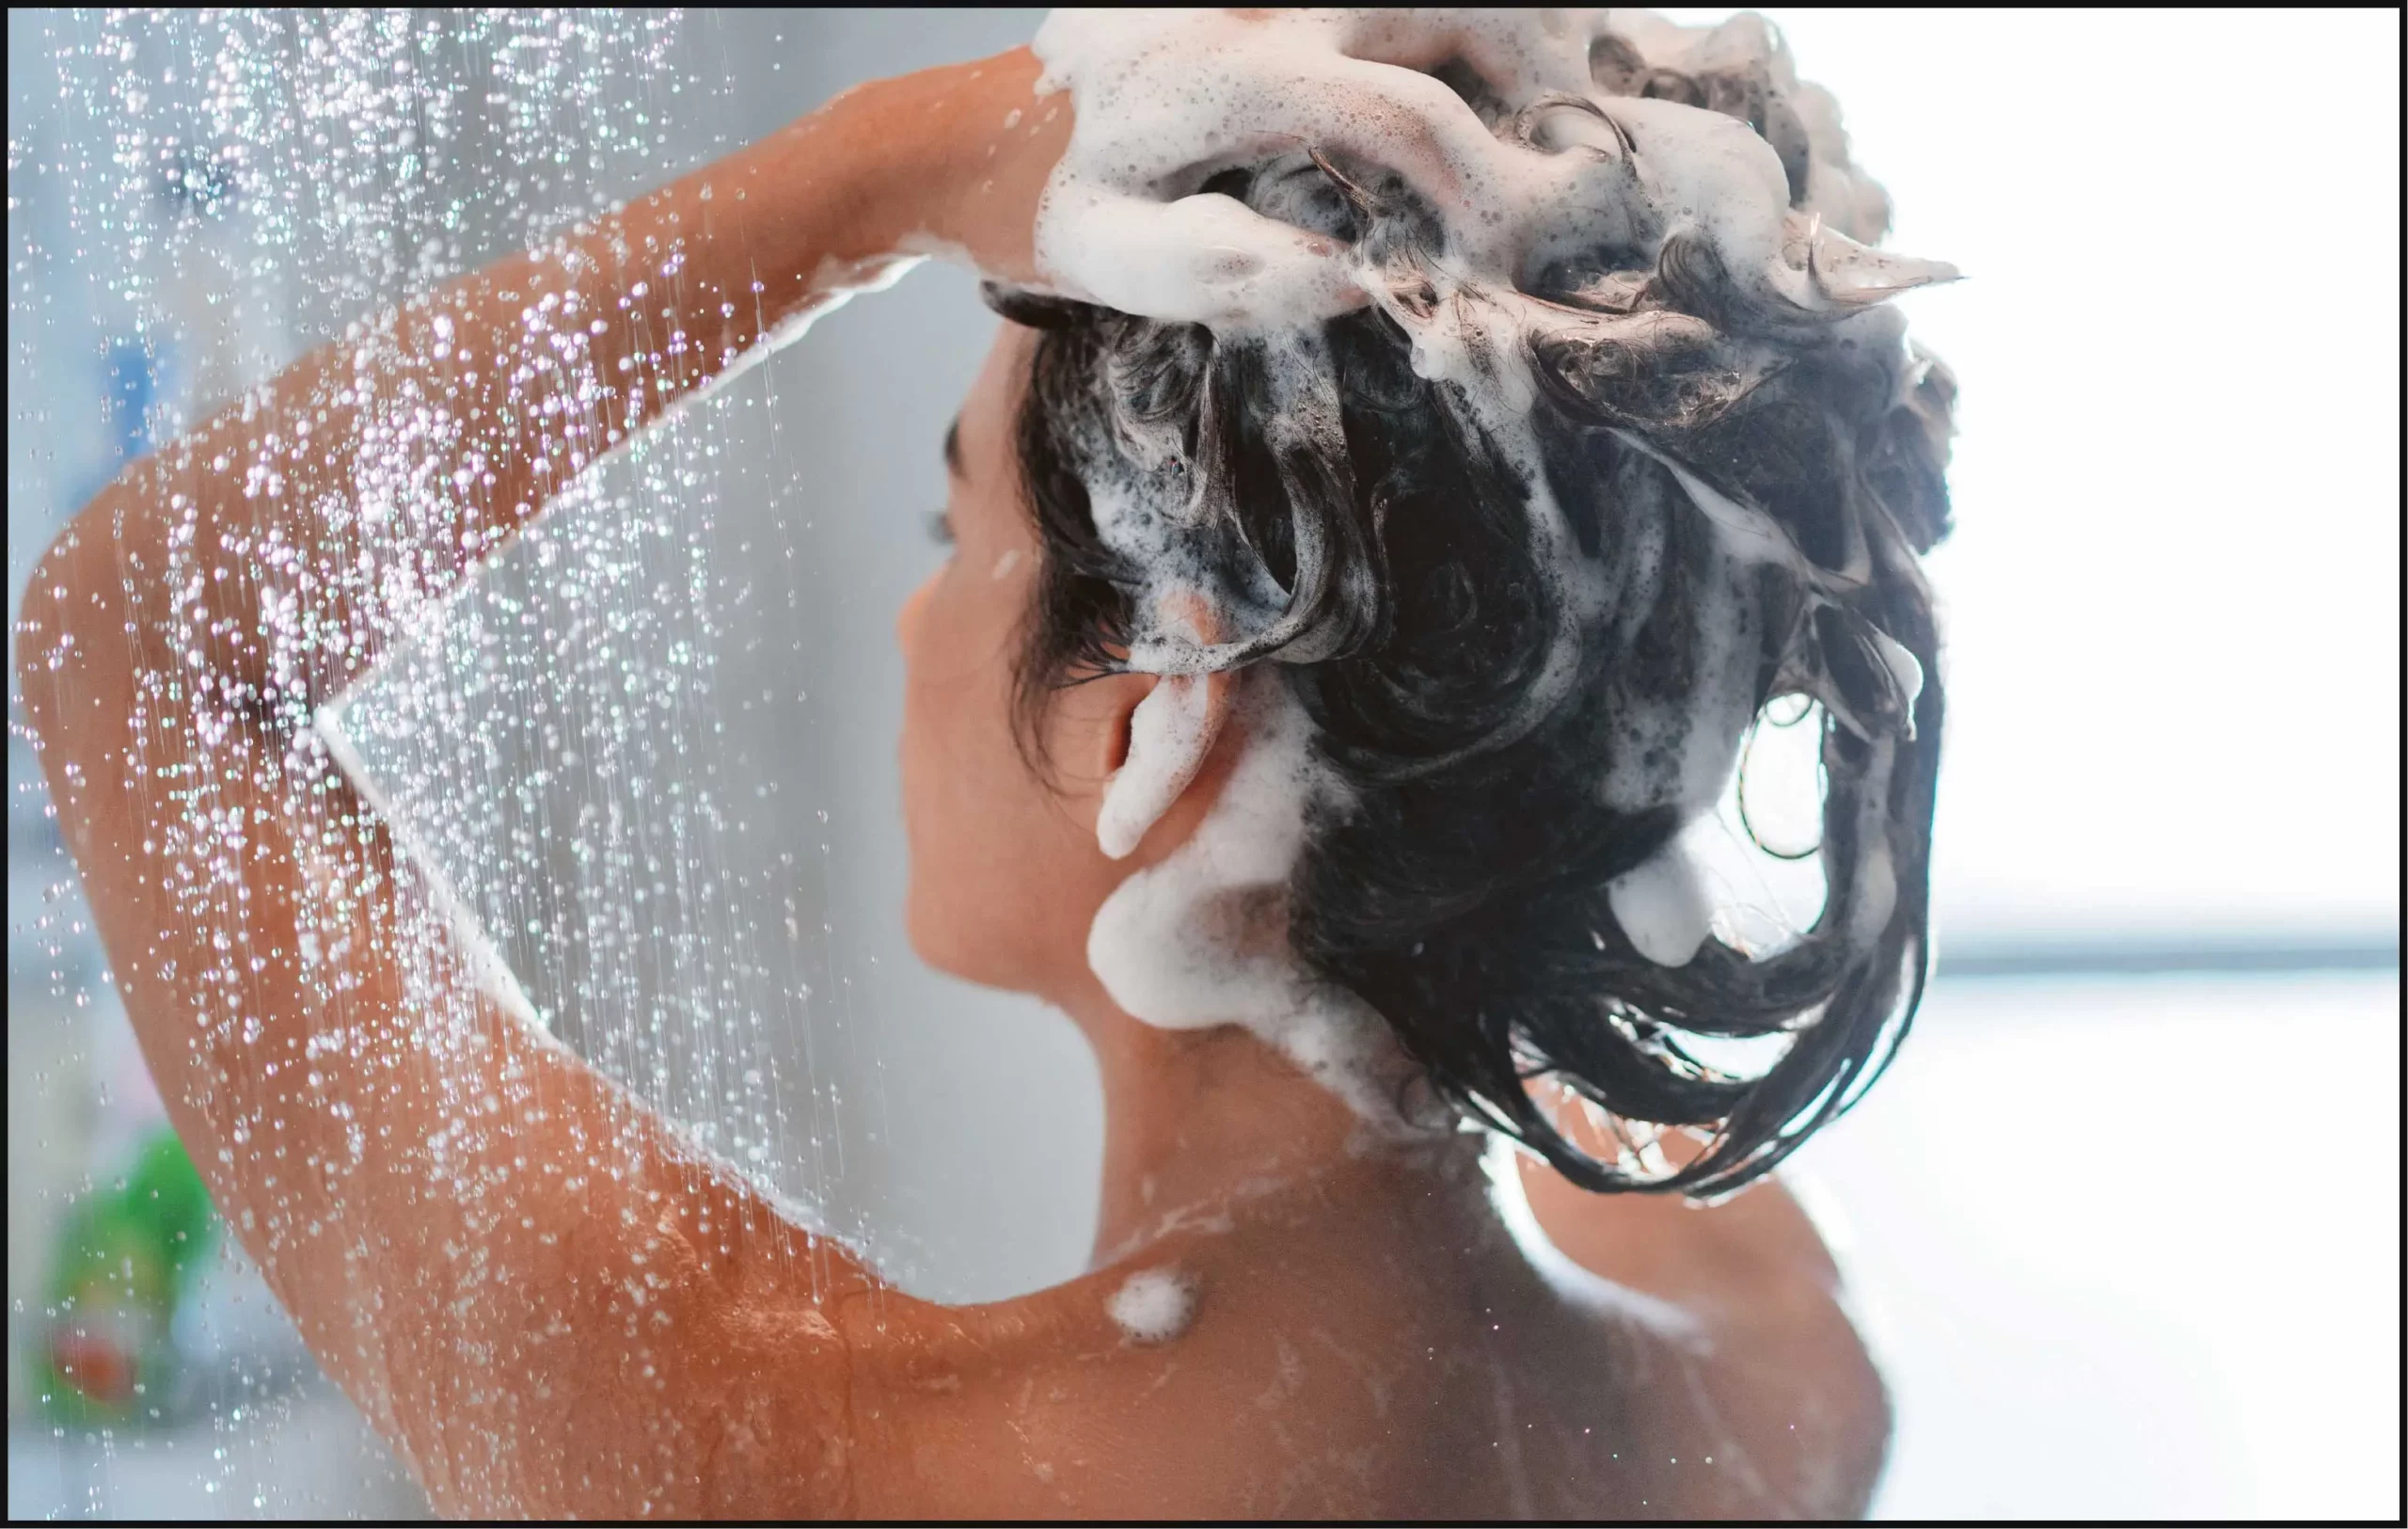 Woman using hydrating shampoo to wash hair.